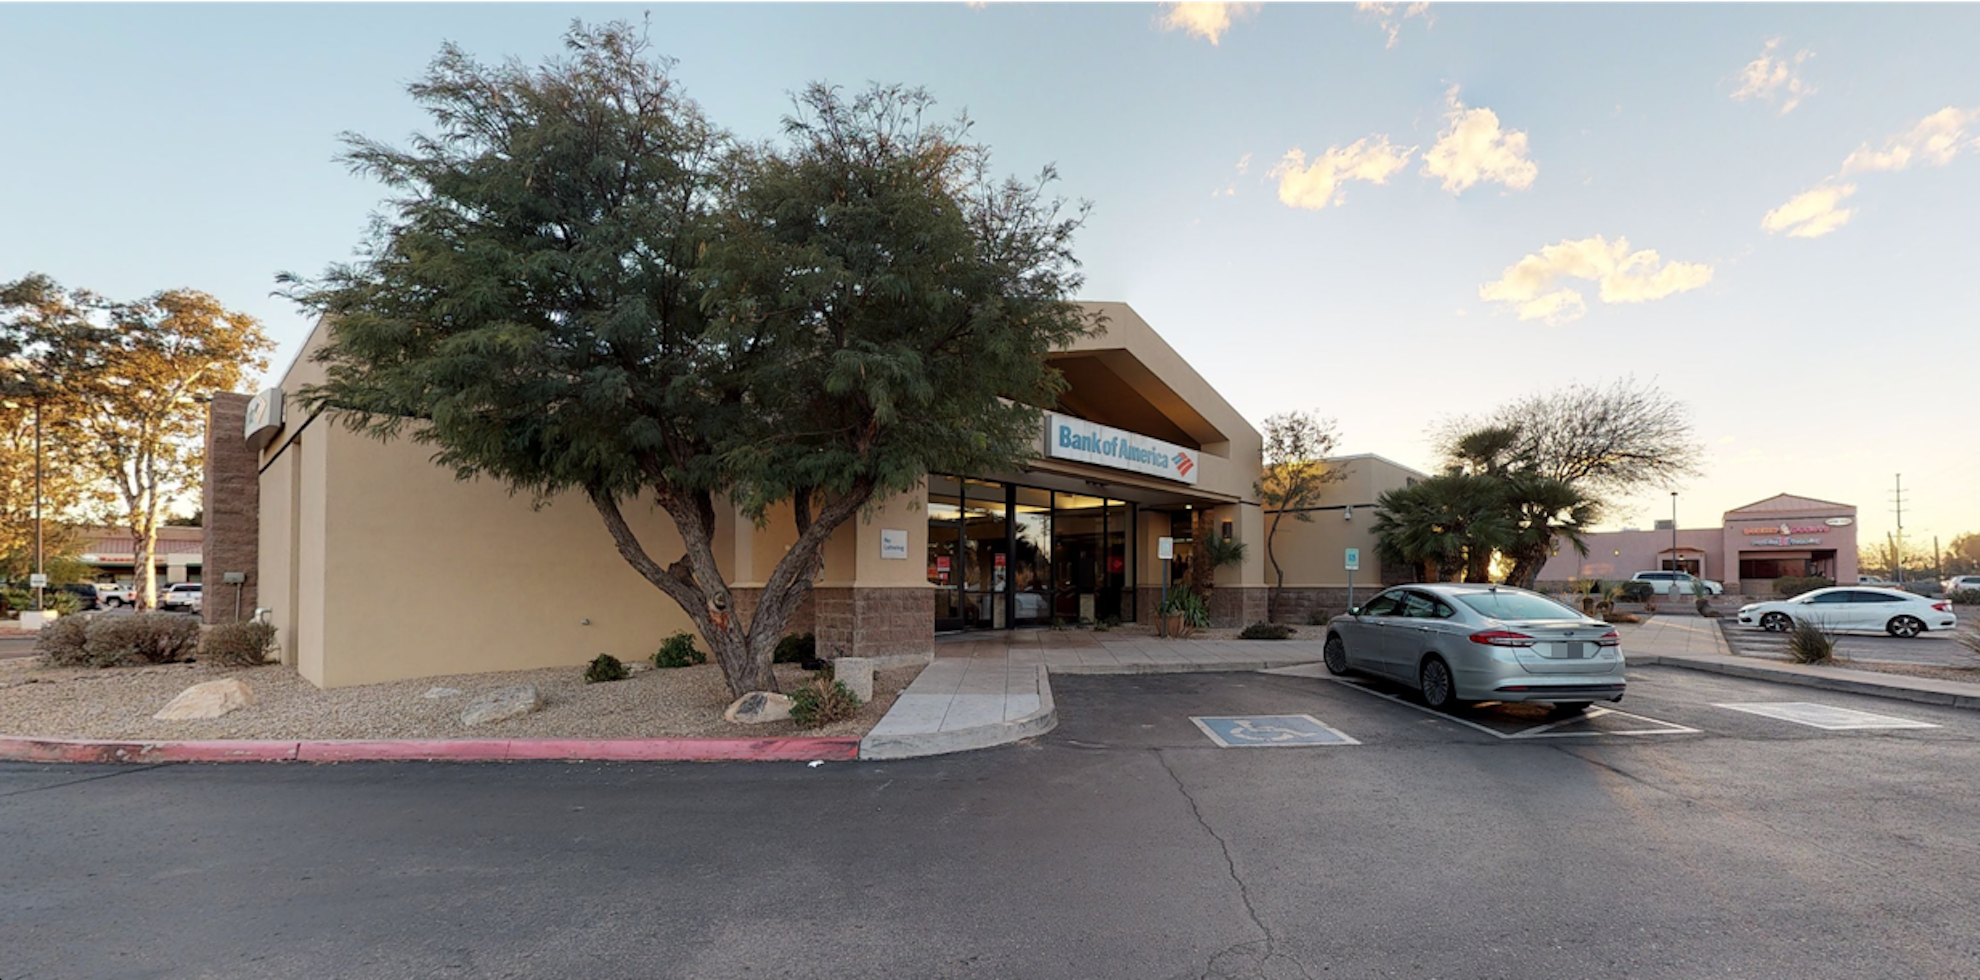 Bank of America financial center with drive-thru ATM | 1601 W Valencia Rd, Tucson, AZ 85746